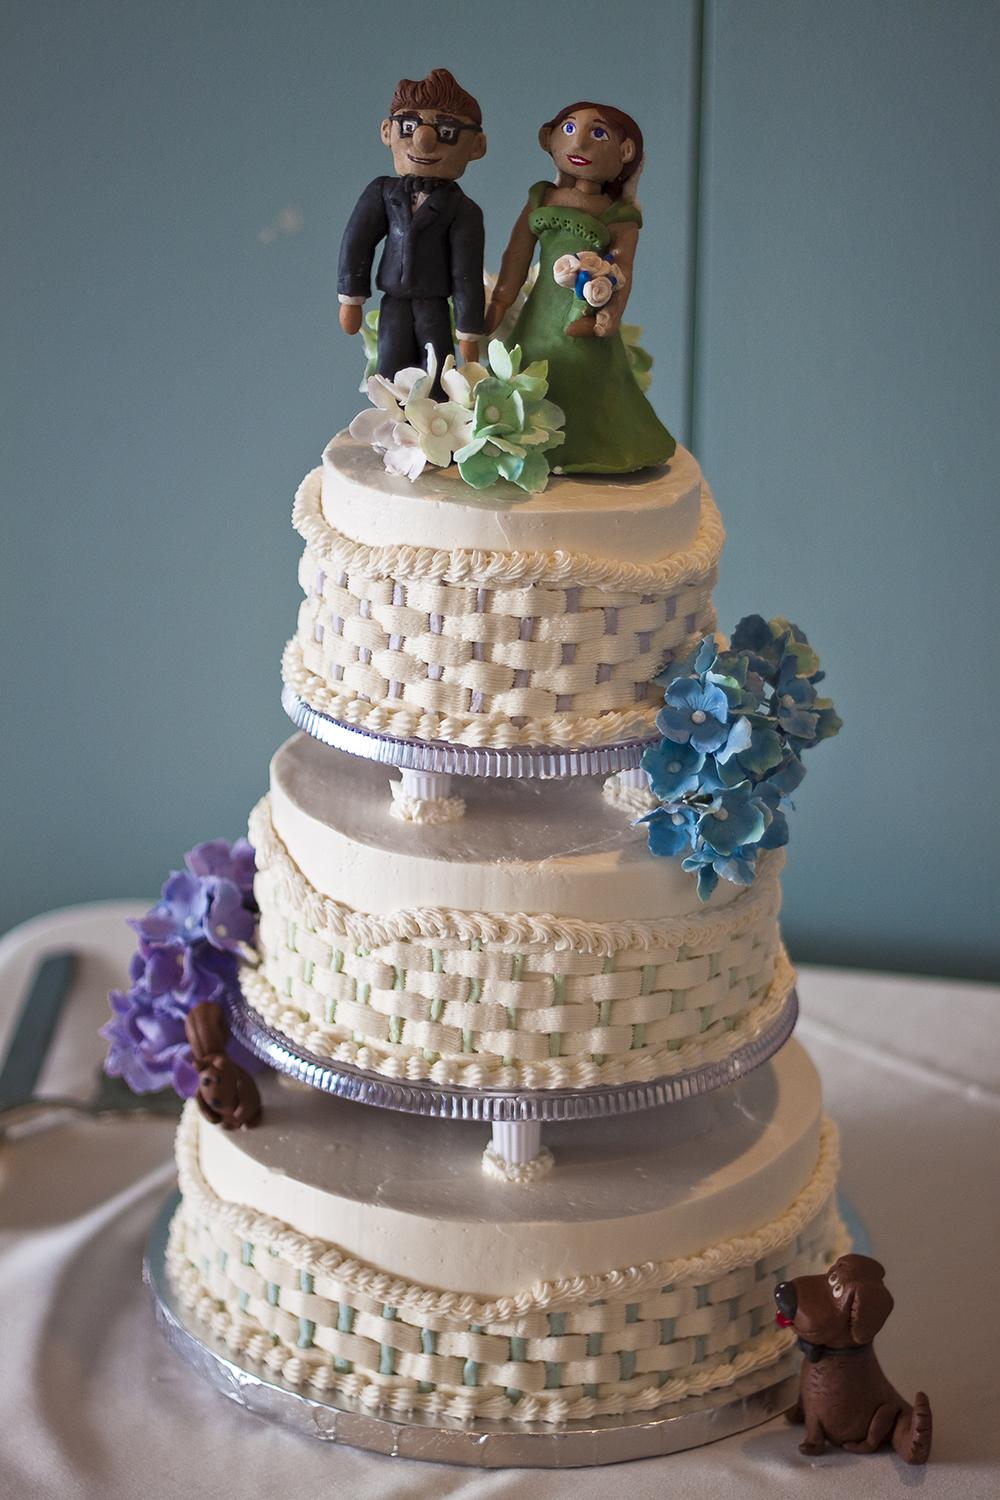 The Wedding Cake. 3 tiers